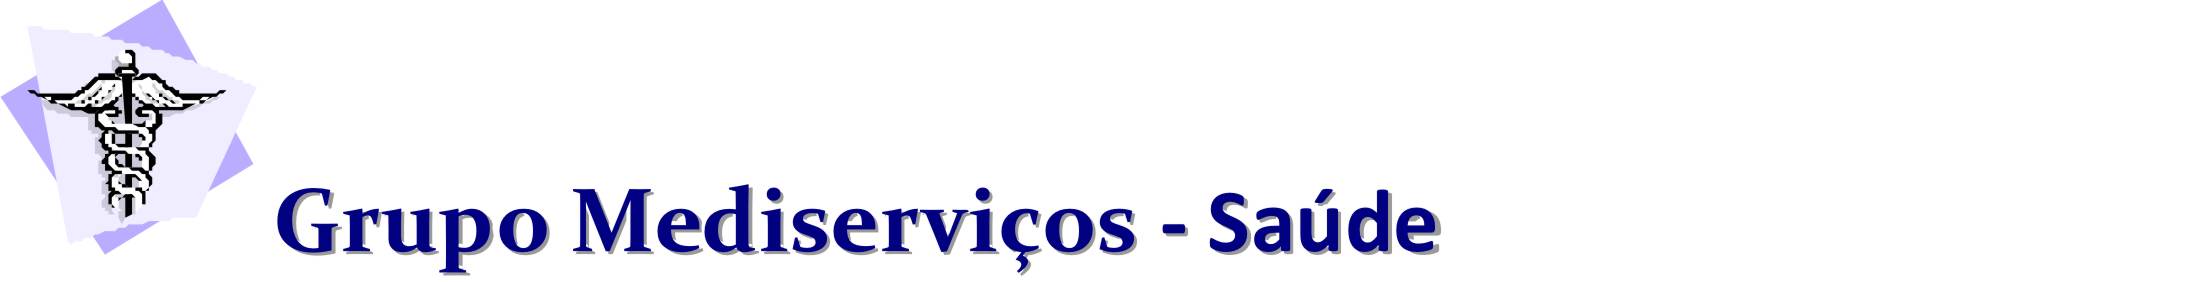 mediservicos-saude_logo.jpg